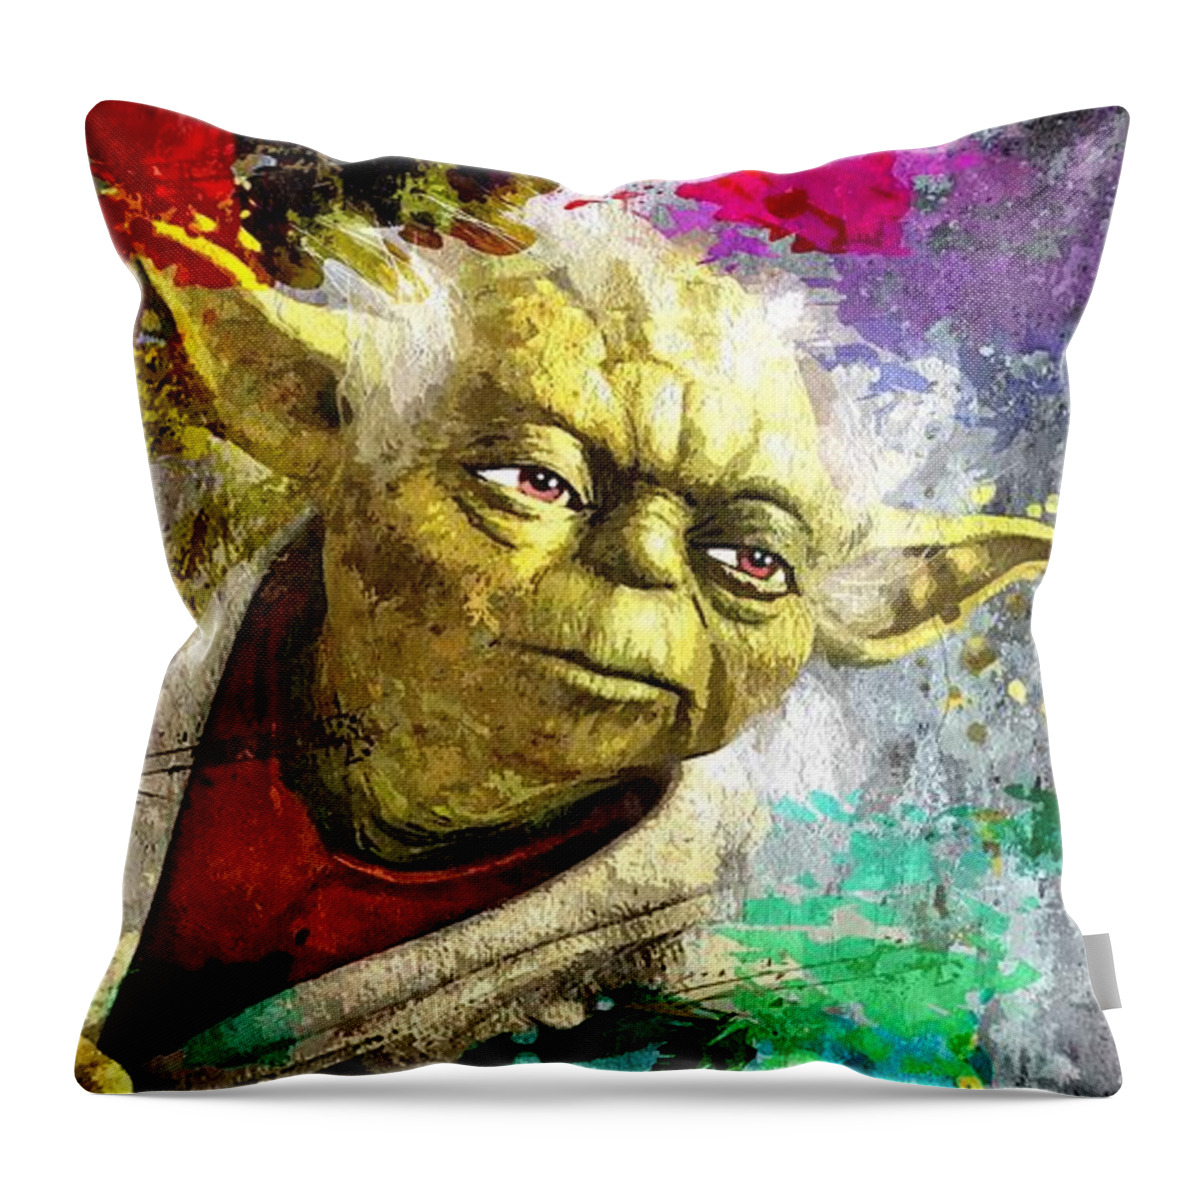 Master Yoda Throw Pillow featuring the mixed media Master Yoda by Daniel Janda